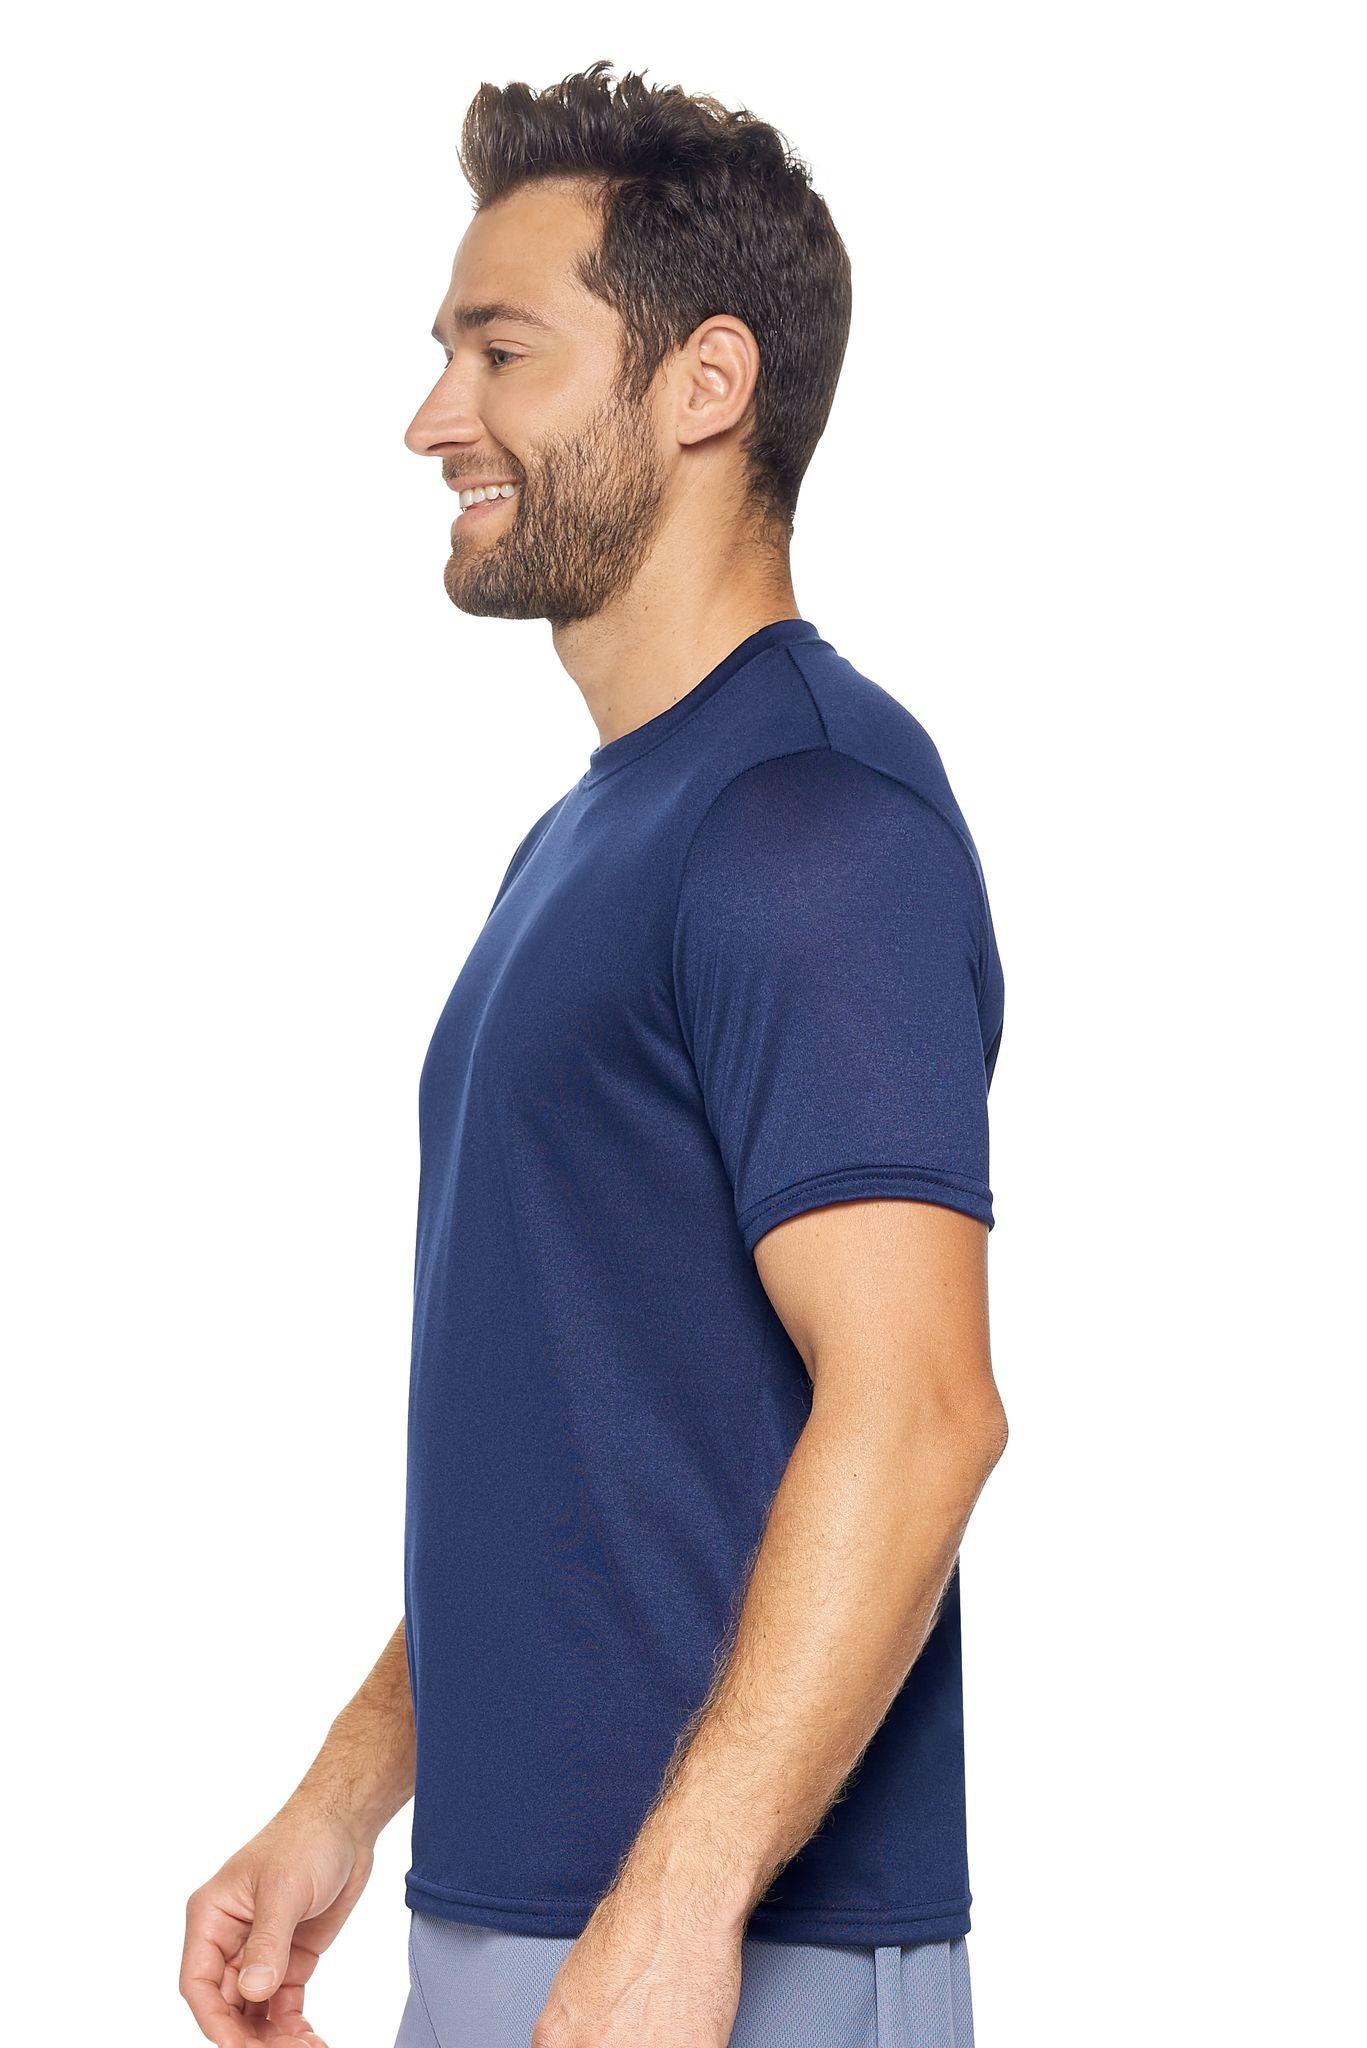 Expert Brand Wholesale Men's Short Sleeve Natural-Feel Jersey Crewneck in Navy Image 2#navy